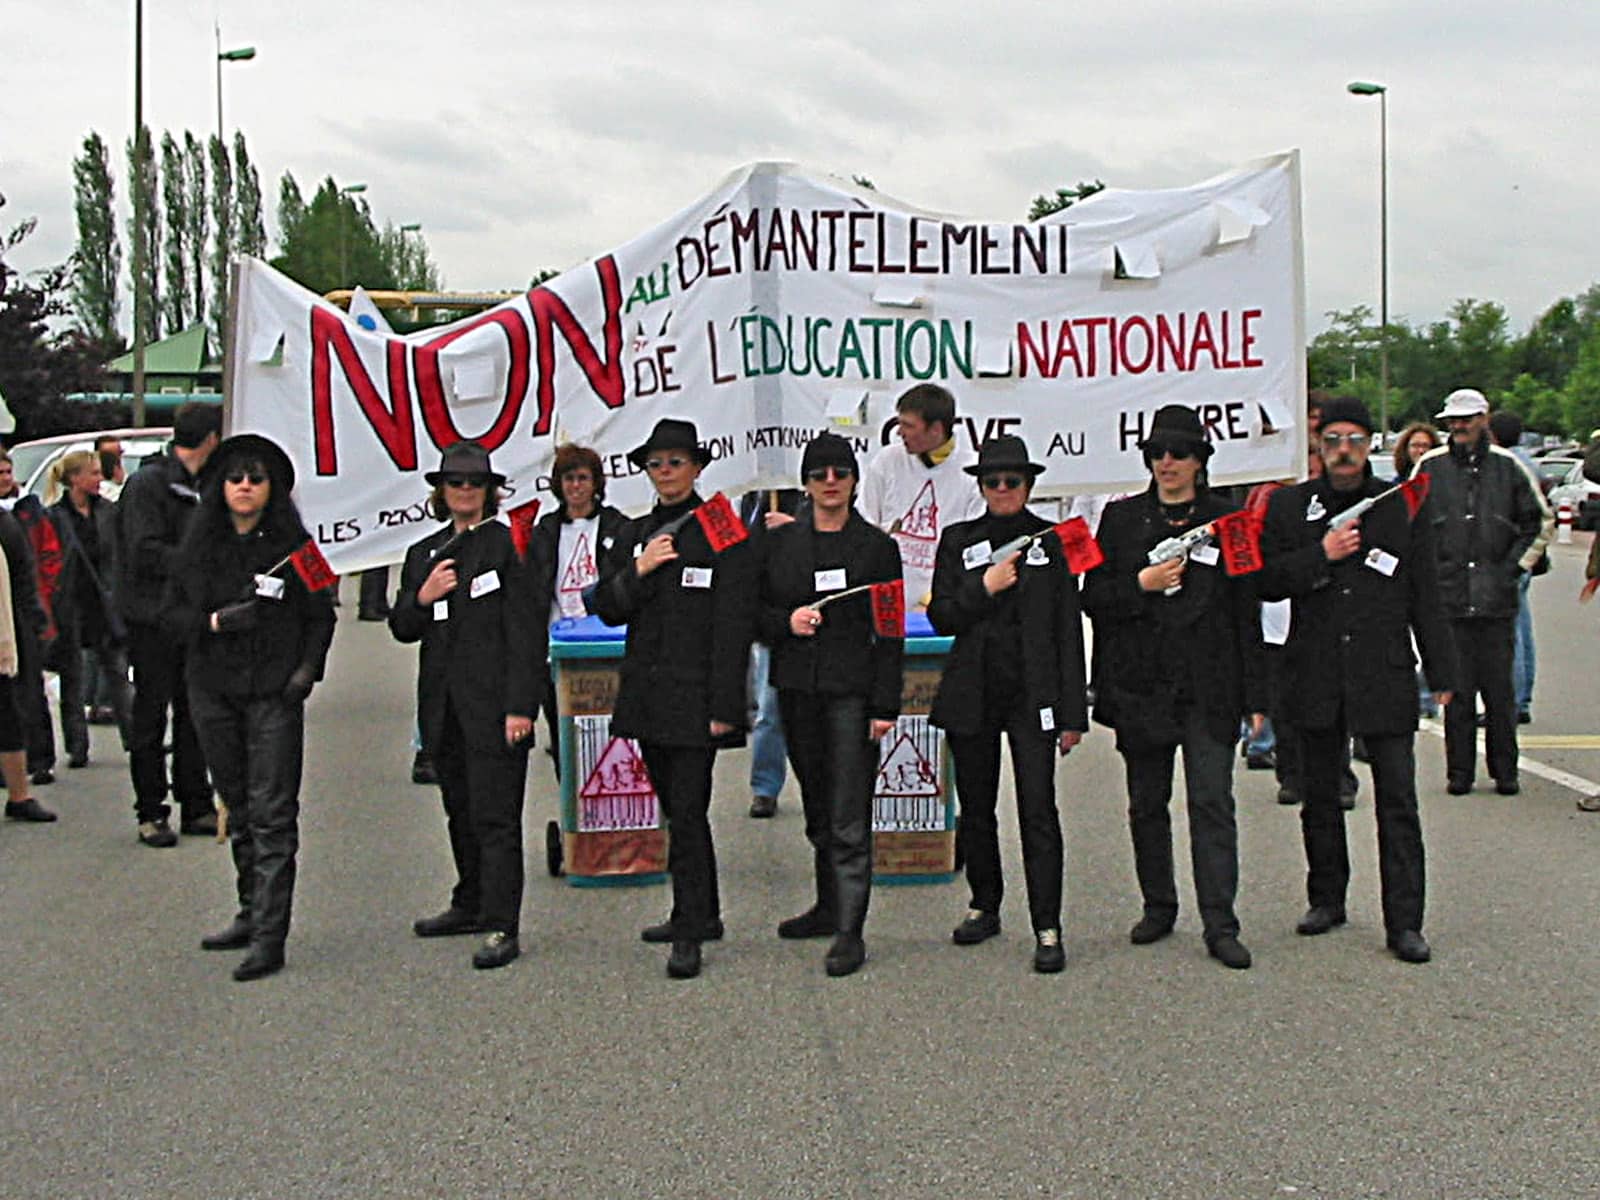 https://commons.wikimedia.org/wiki/File:Manifestation_against_politic_of_education_in_France_in_2003.jpg